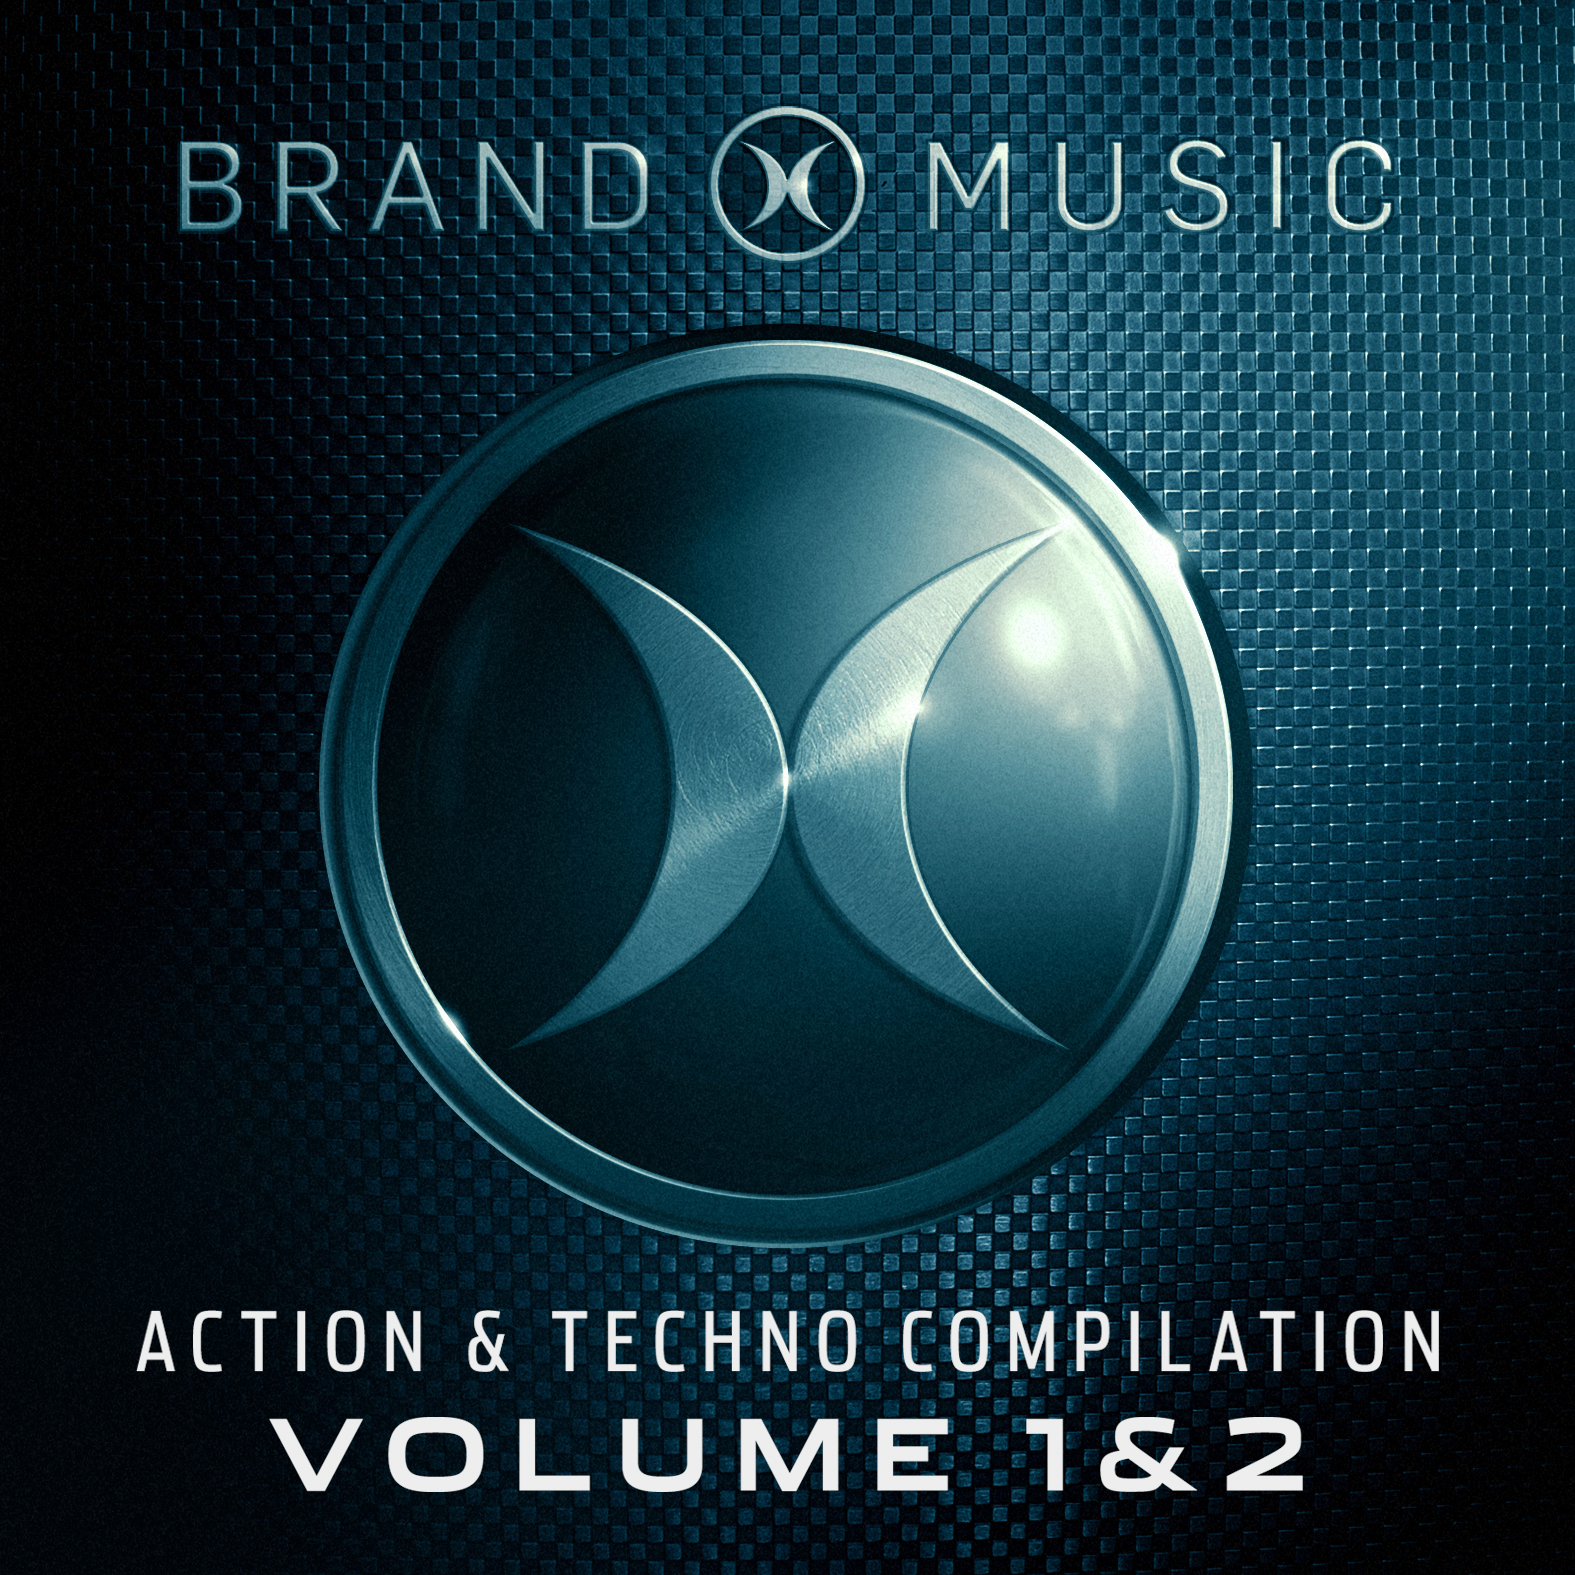 Action & Techno Volume 1 & 2